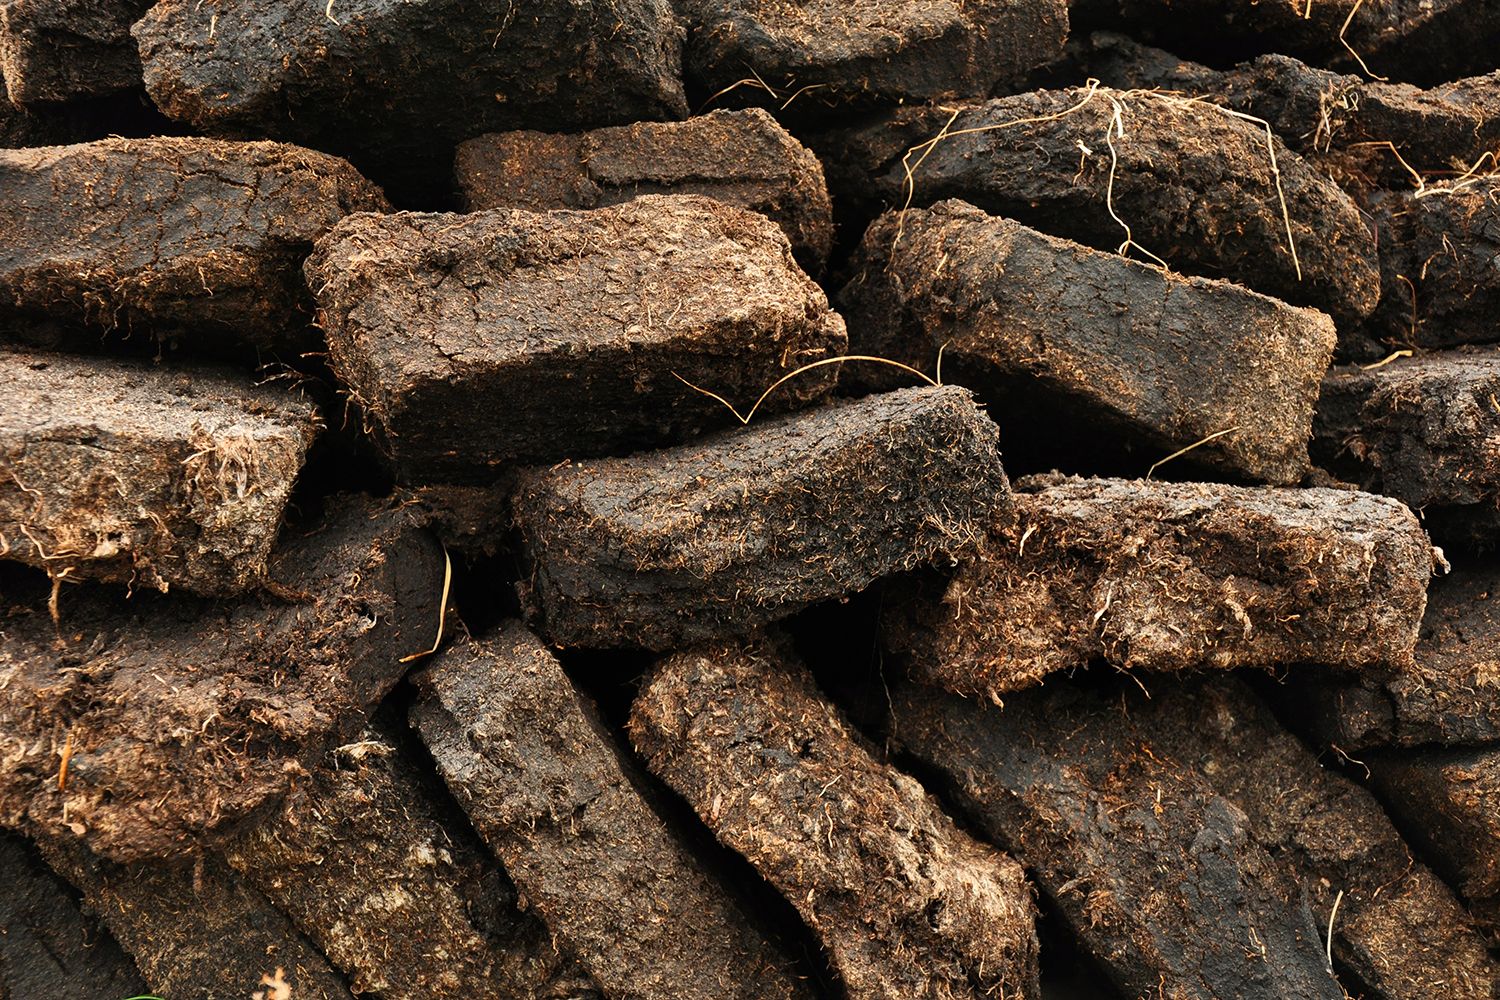 Bricks of peat